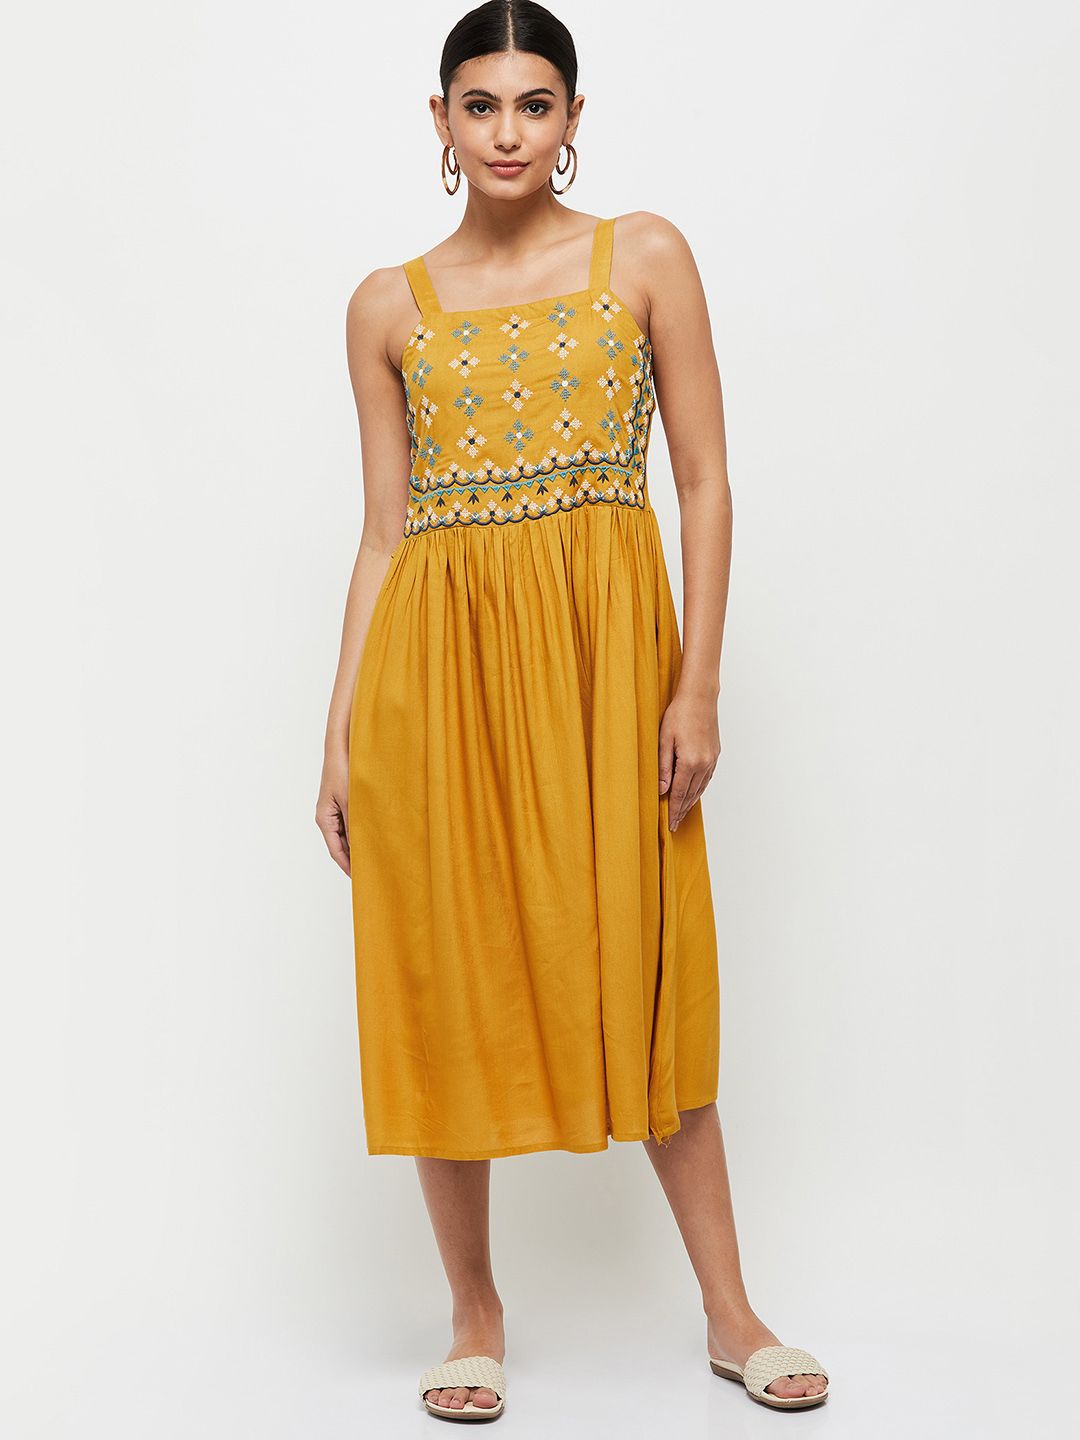 max Mustard Yellow Floral Midi Dress Price in India